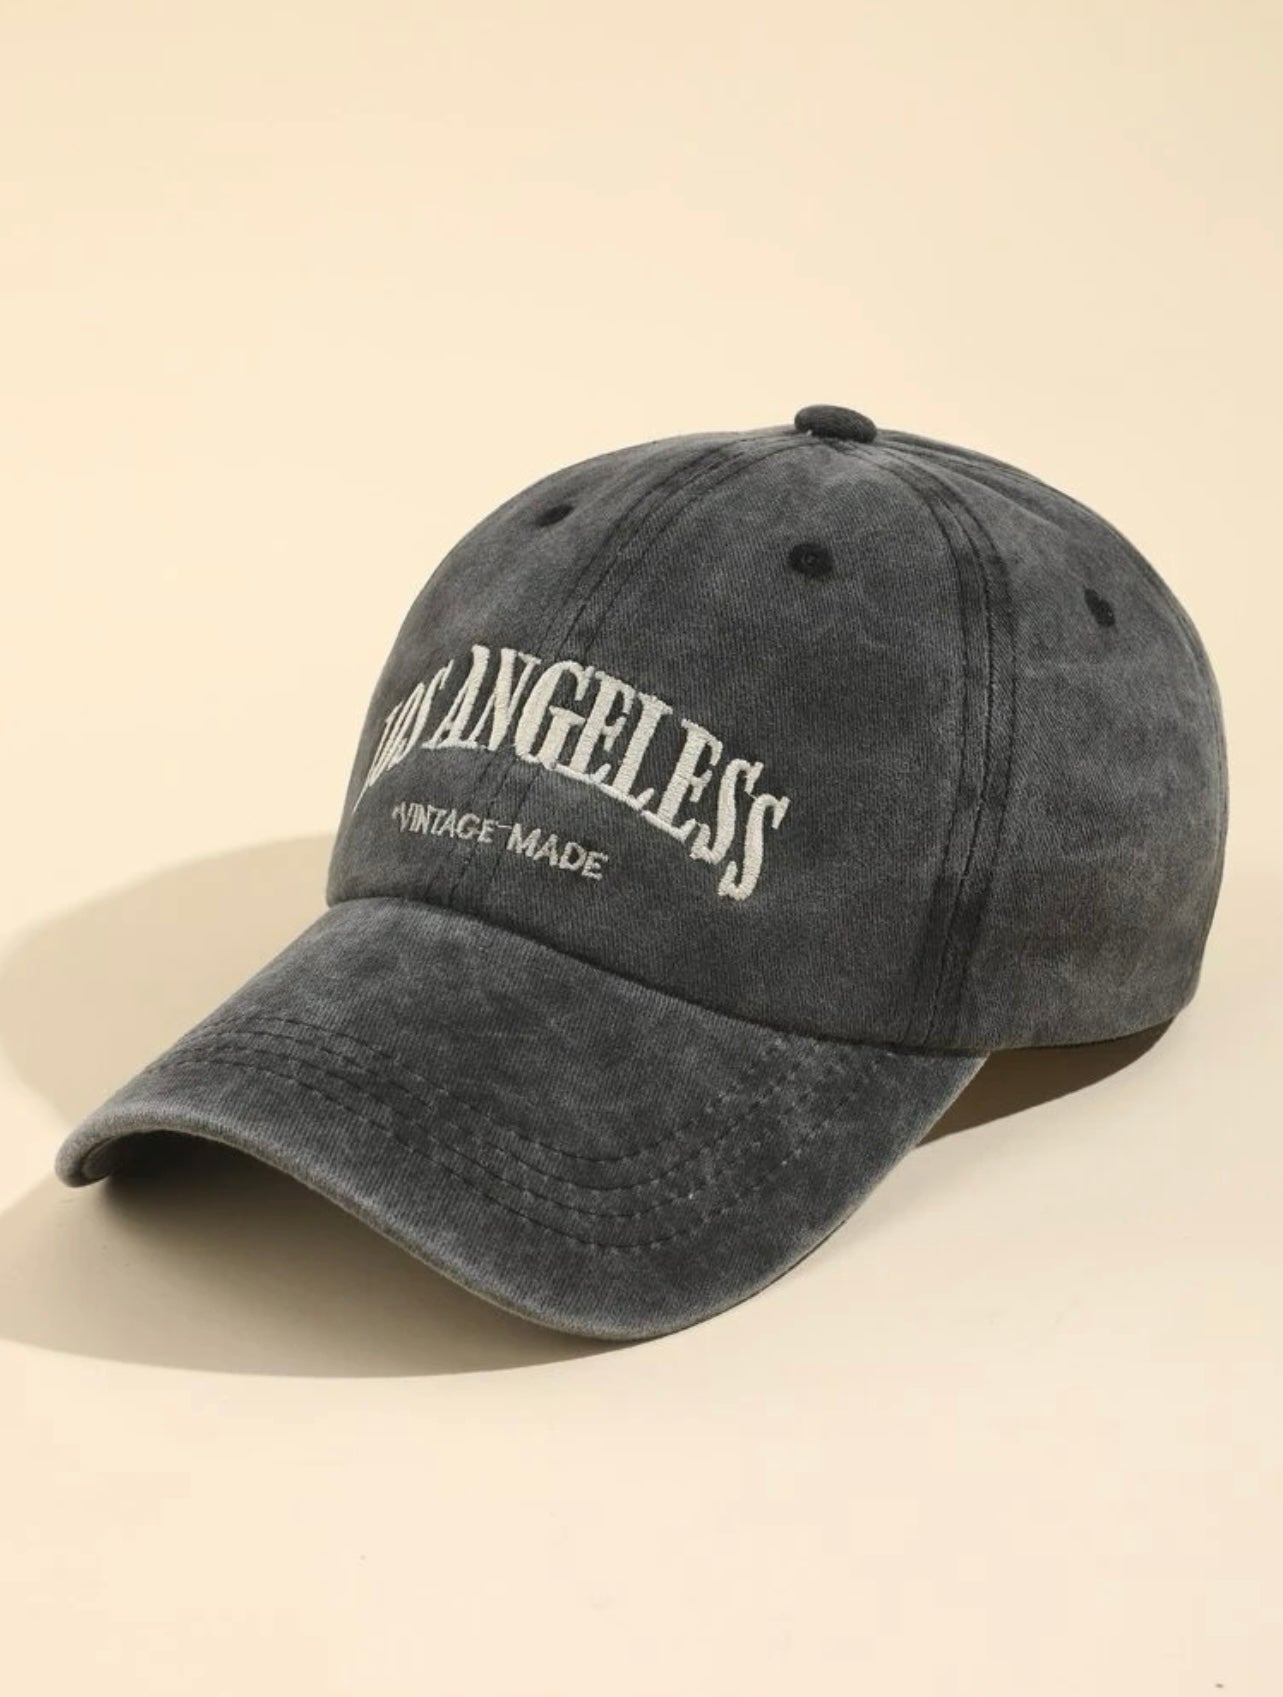 Letter embroidered baseball cap